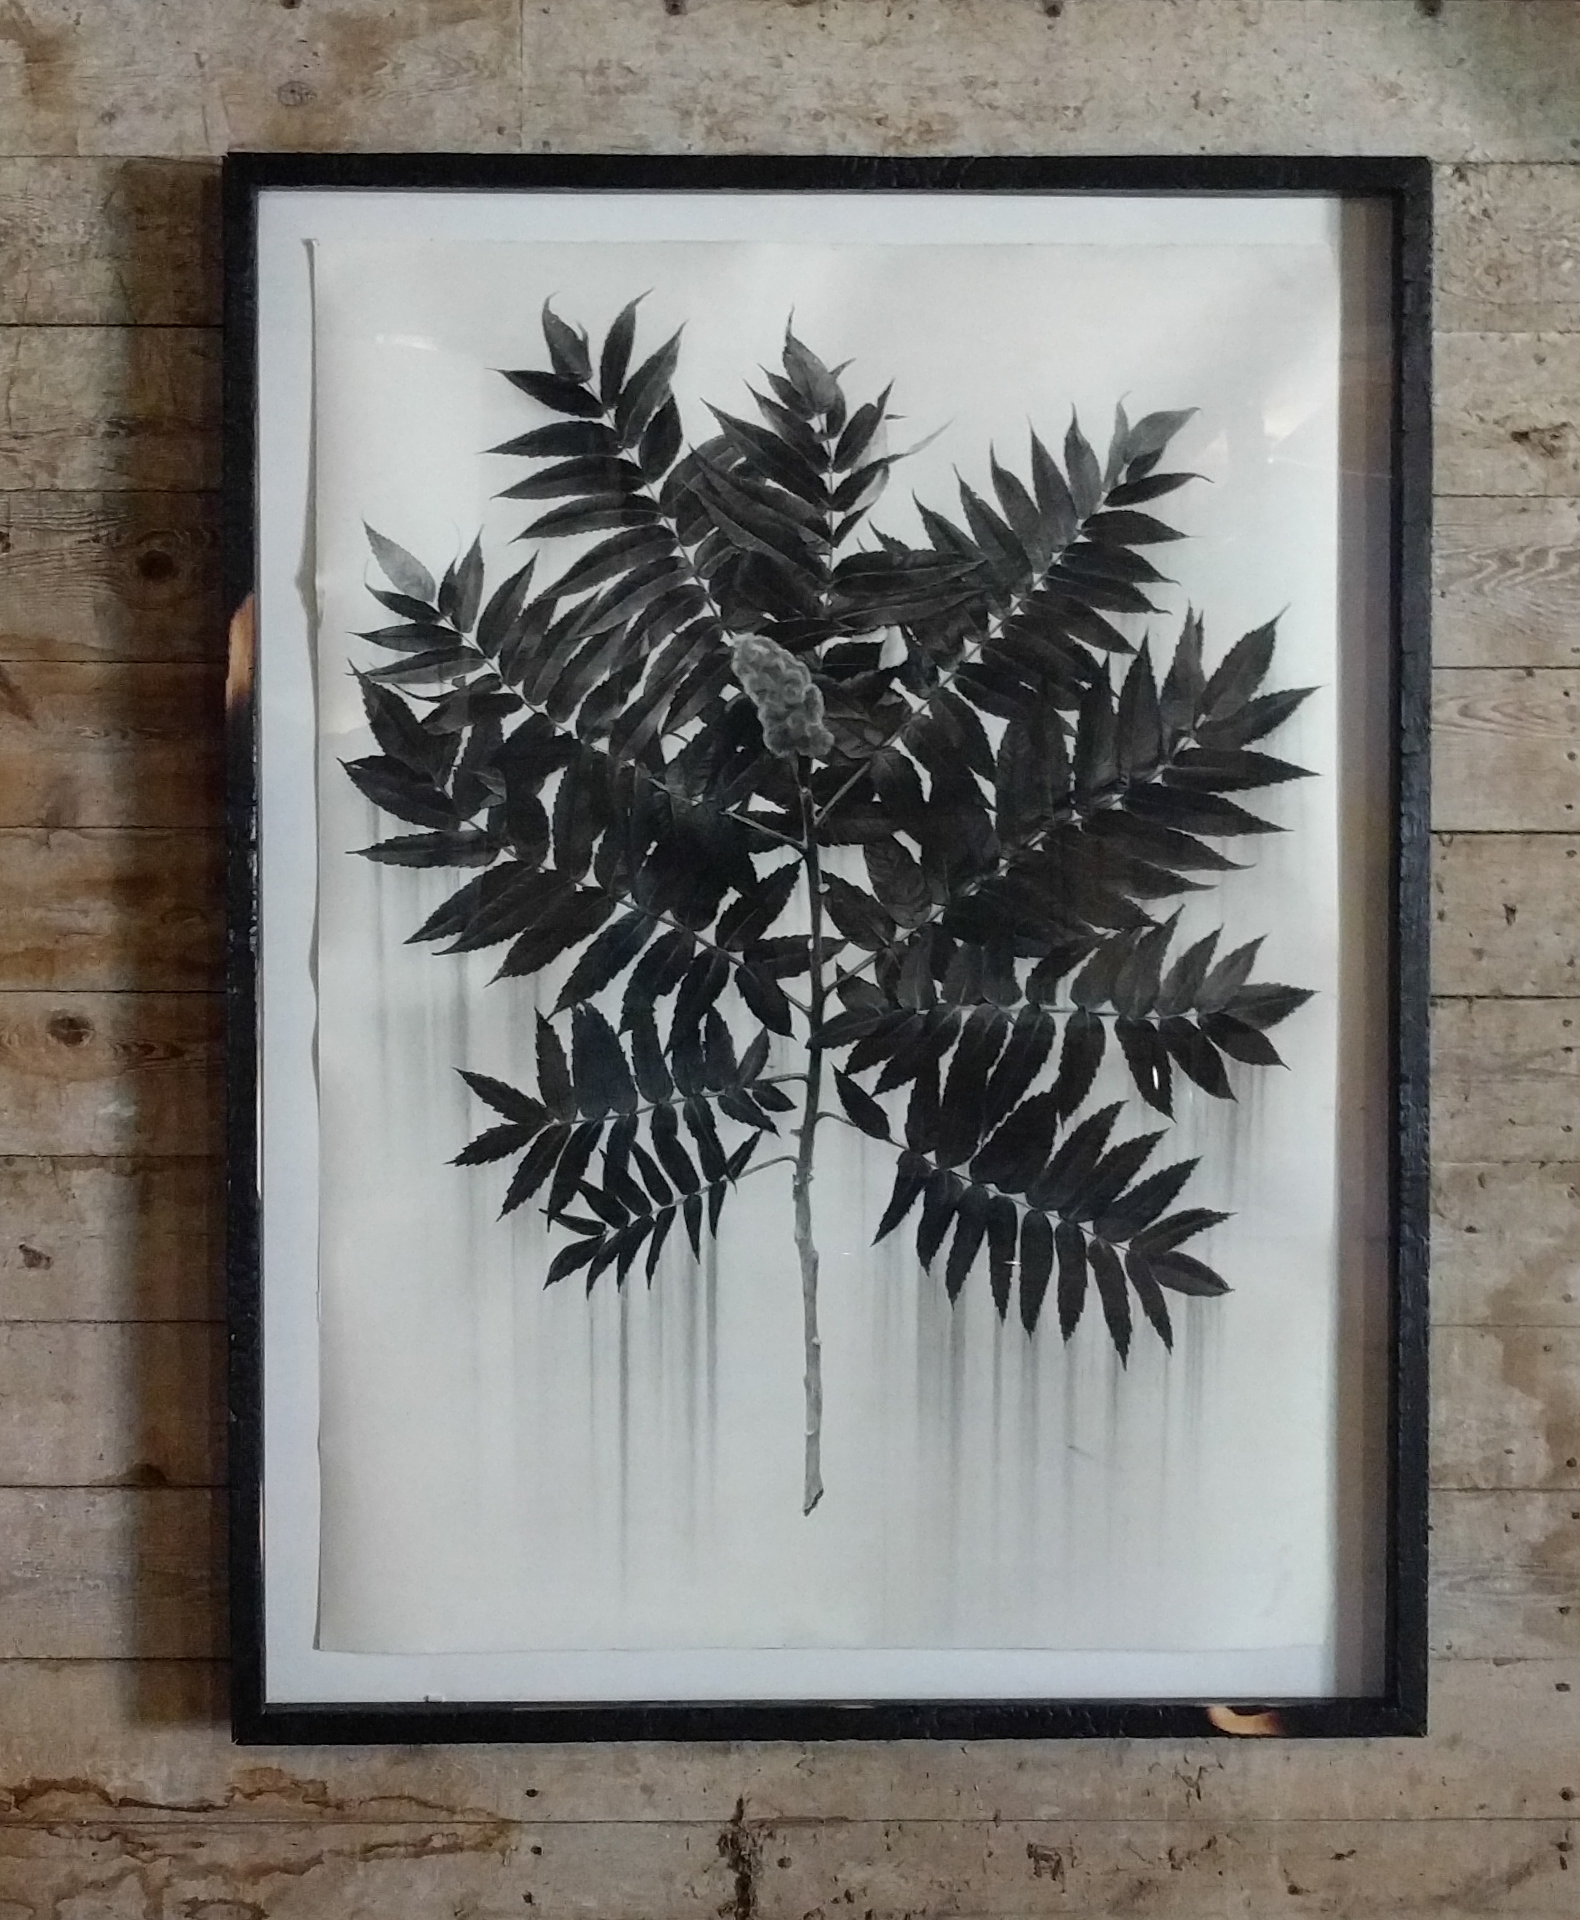 Sumac, charcoal on paper, 54"X 40" 2017